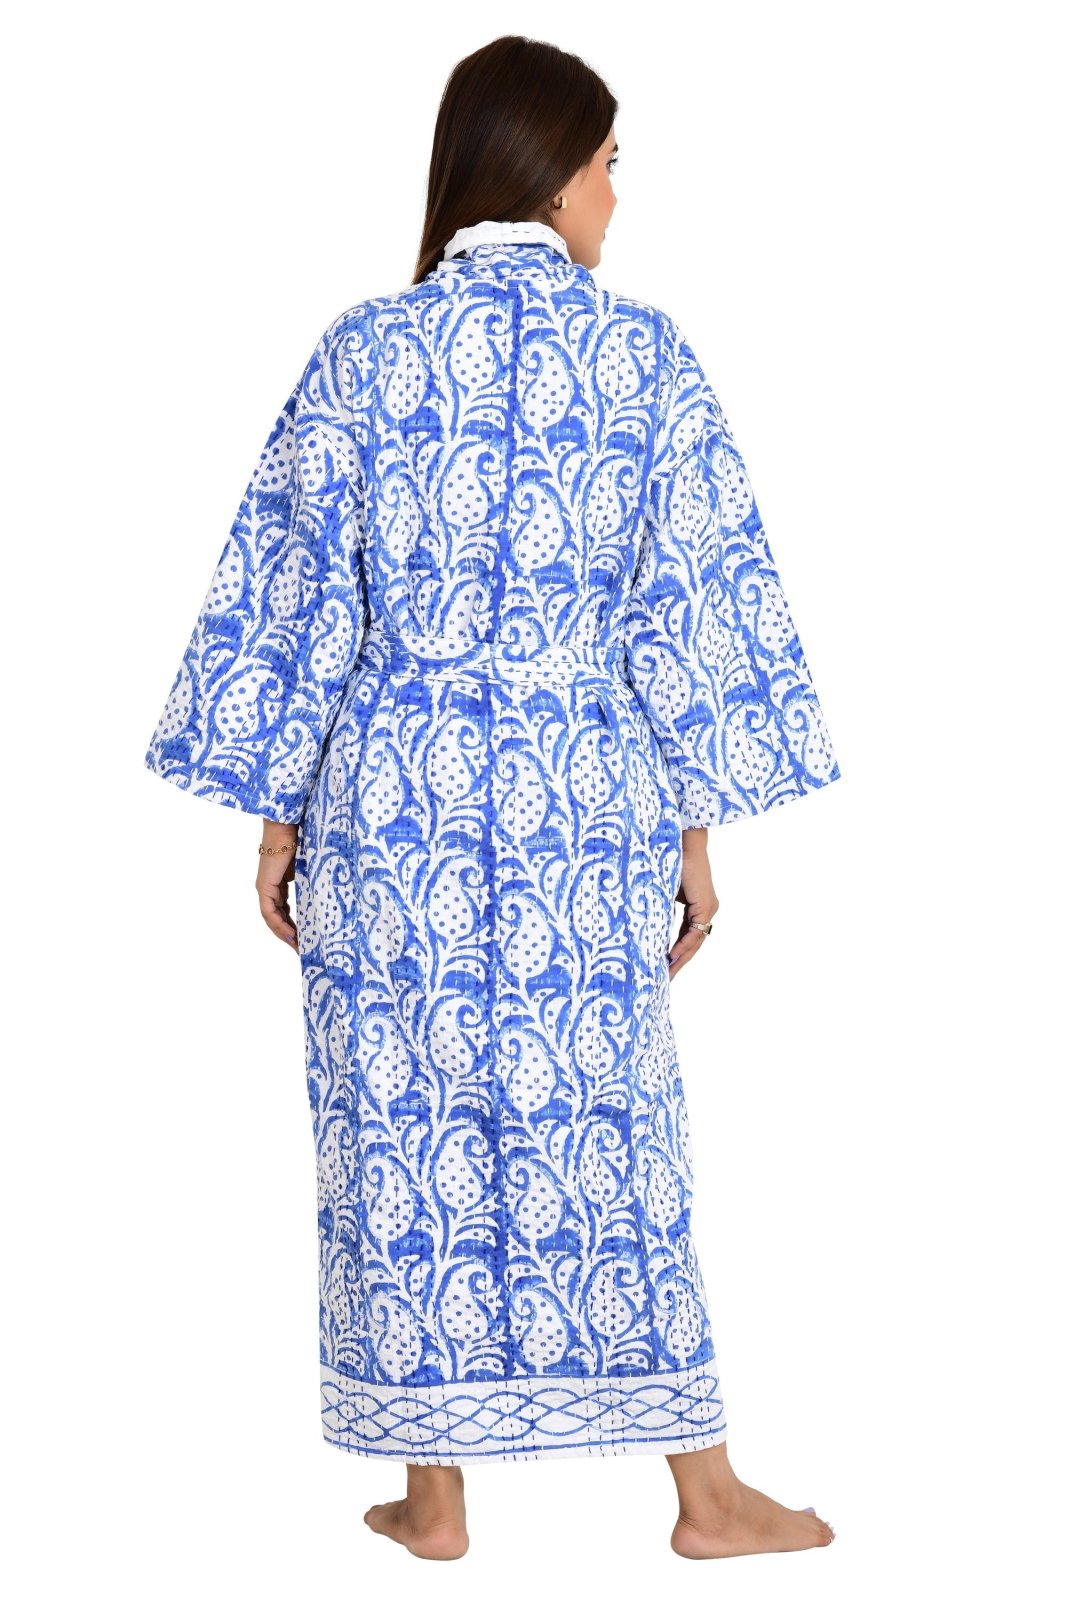 Kantha Stitch 100% Cotton Reversible Long Kimono Women Jacket | Handmade Stitch Robe | Unisex Gift | White Blue Leaf Print - The Eastern Loom